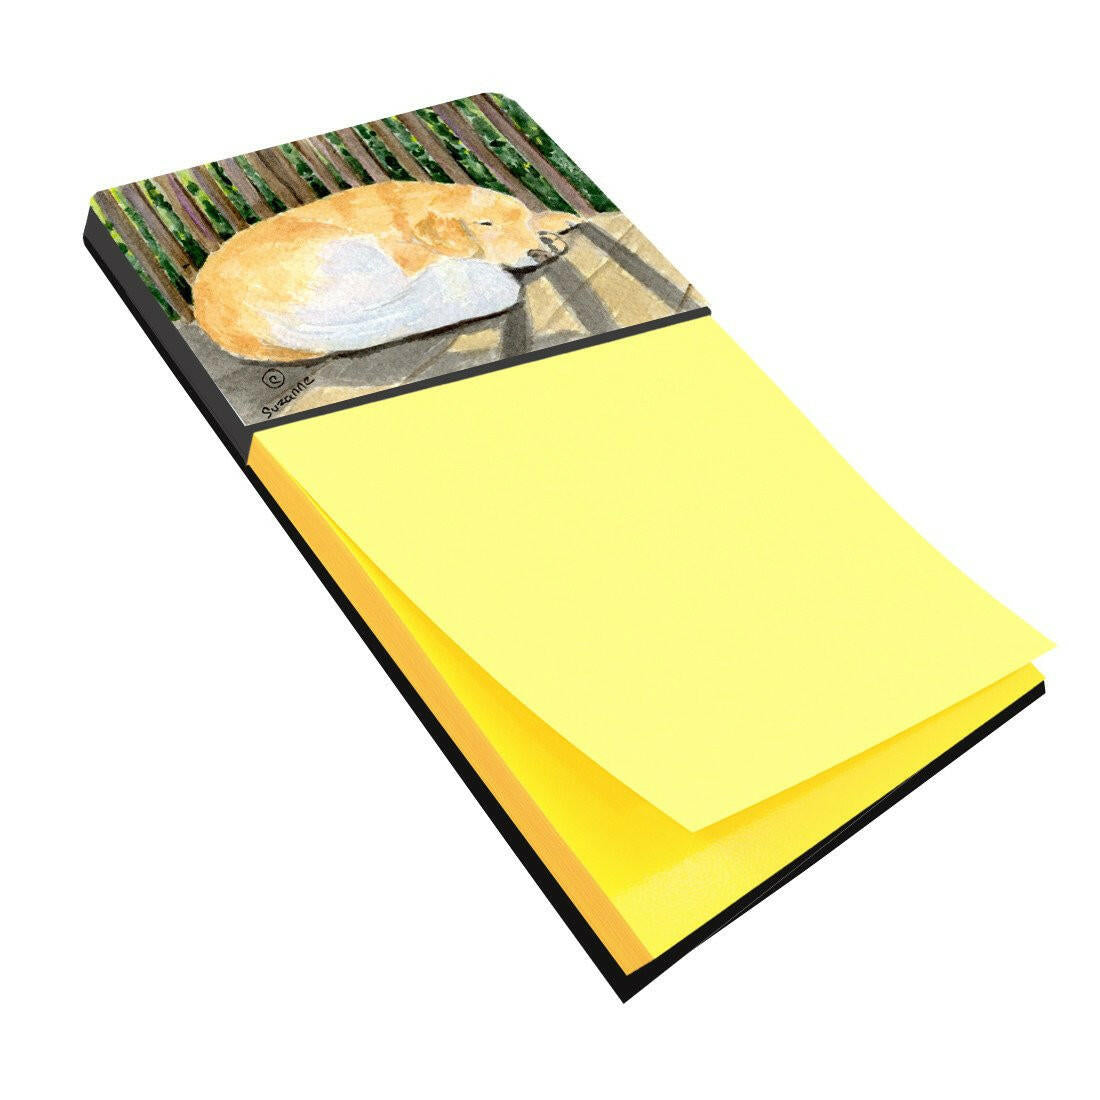 Golden Retriever Refiillable Sticky Note Holder or Postit Note Dispenser SS8760SN by Caroline's Treasures